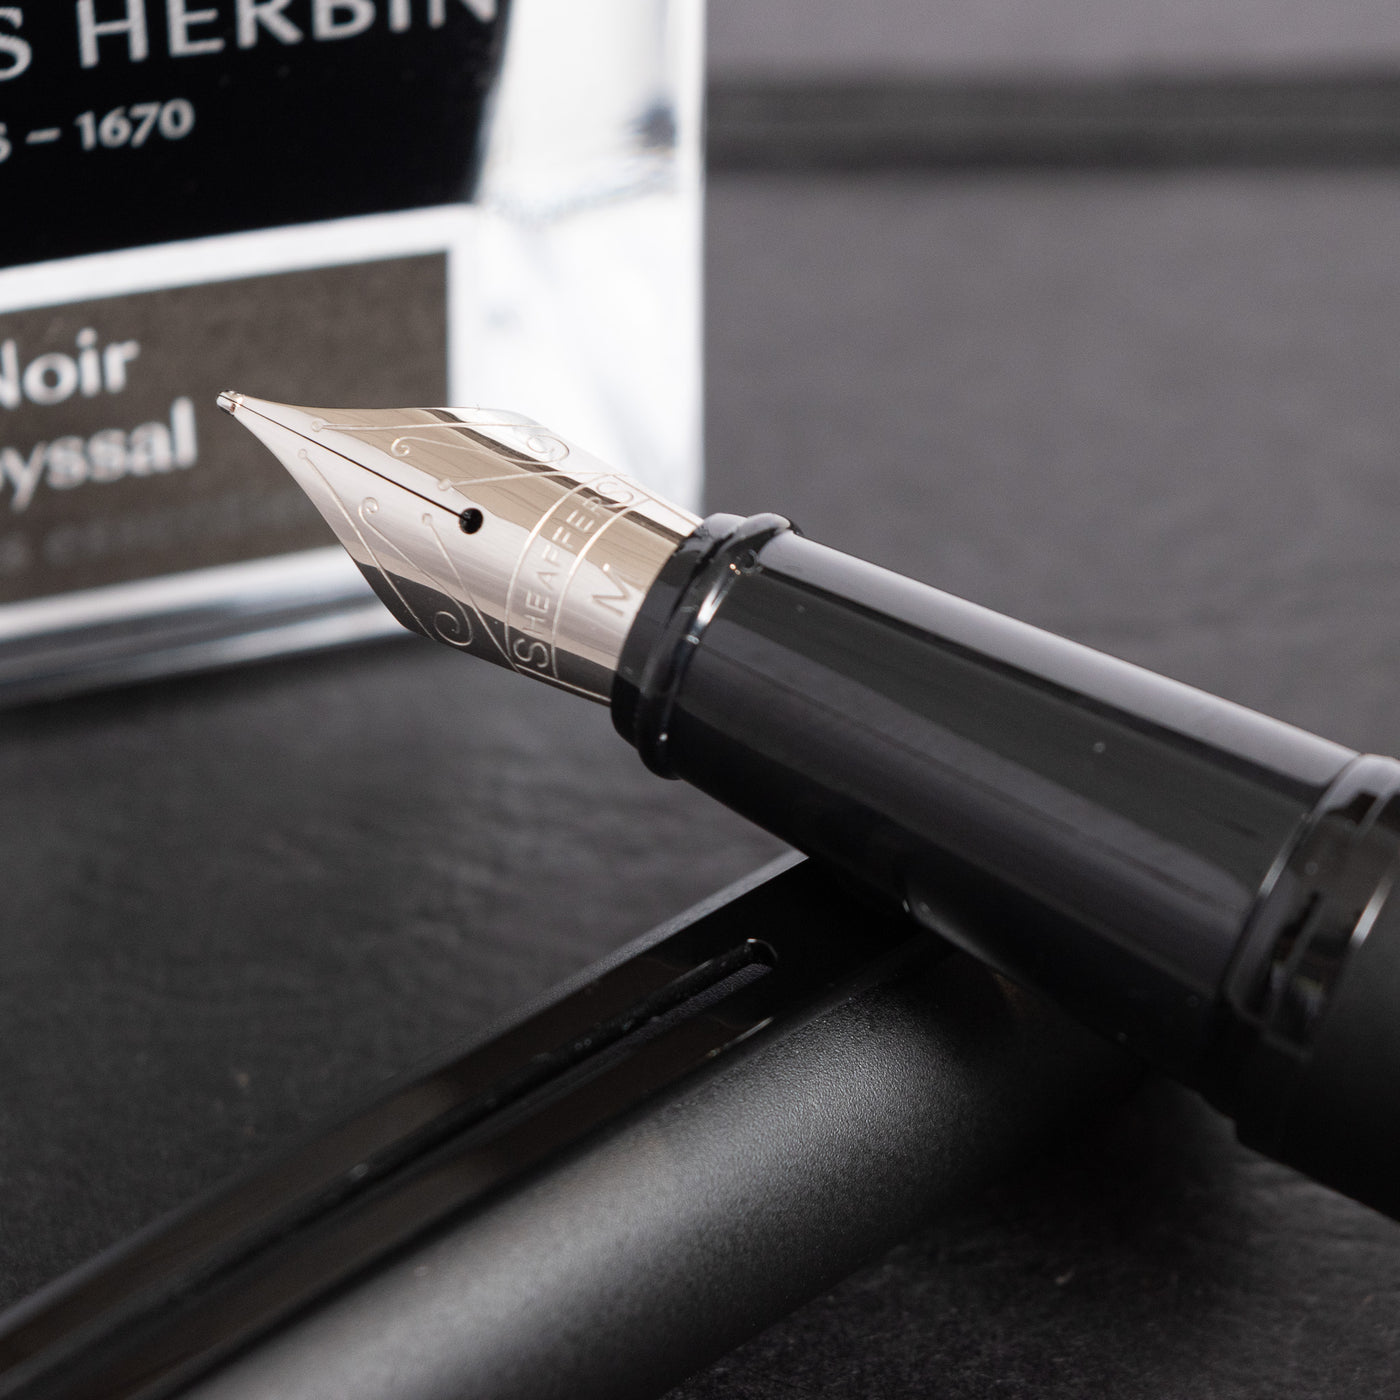  Sheaffer 300 Fountain Pen - Black with Black Trim stainless steel nib